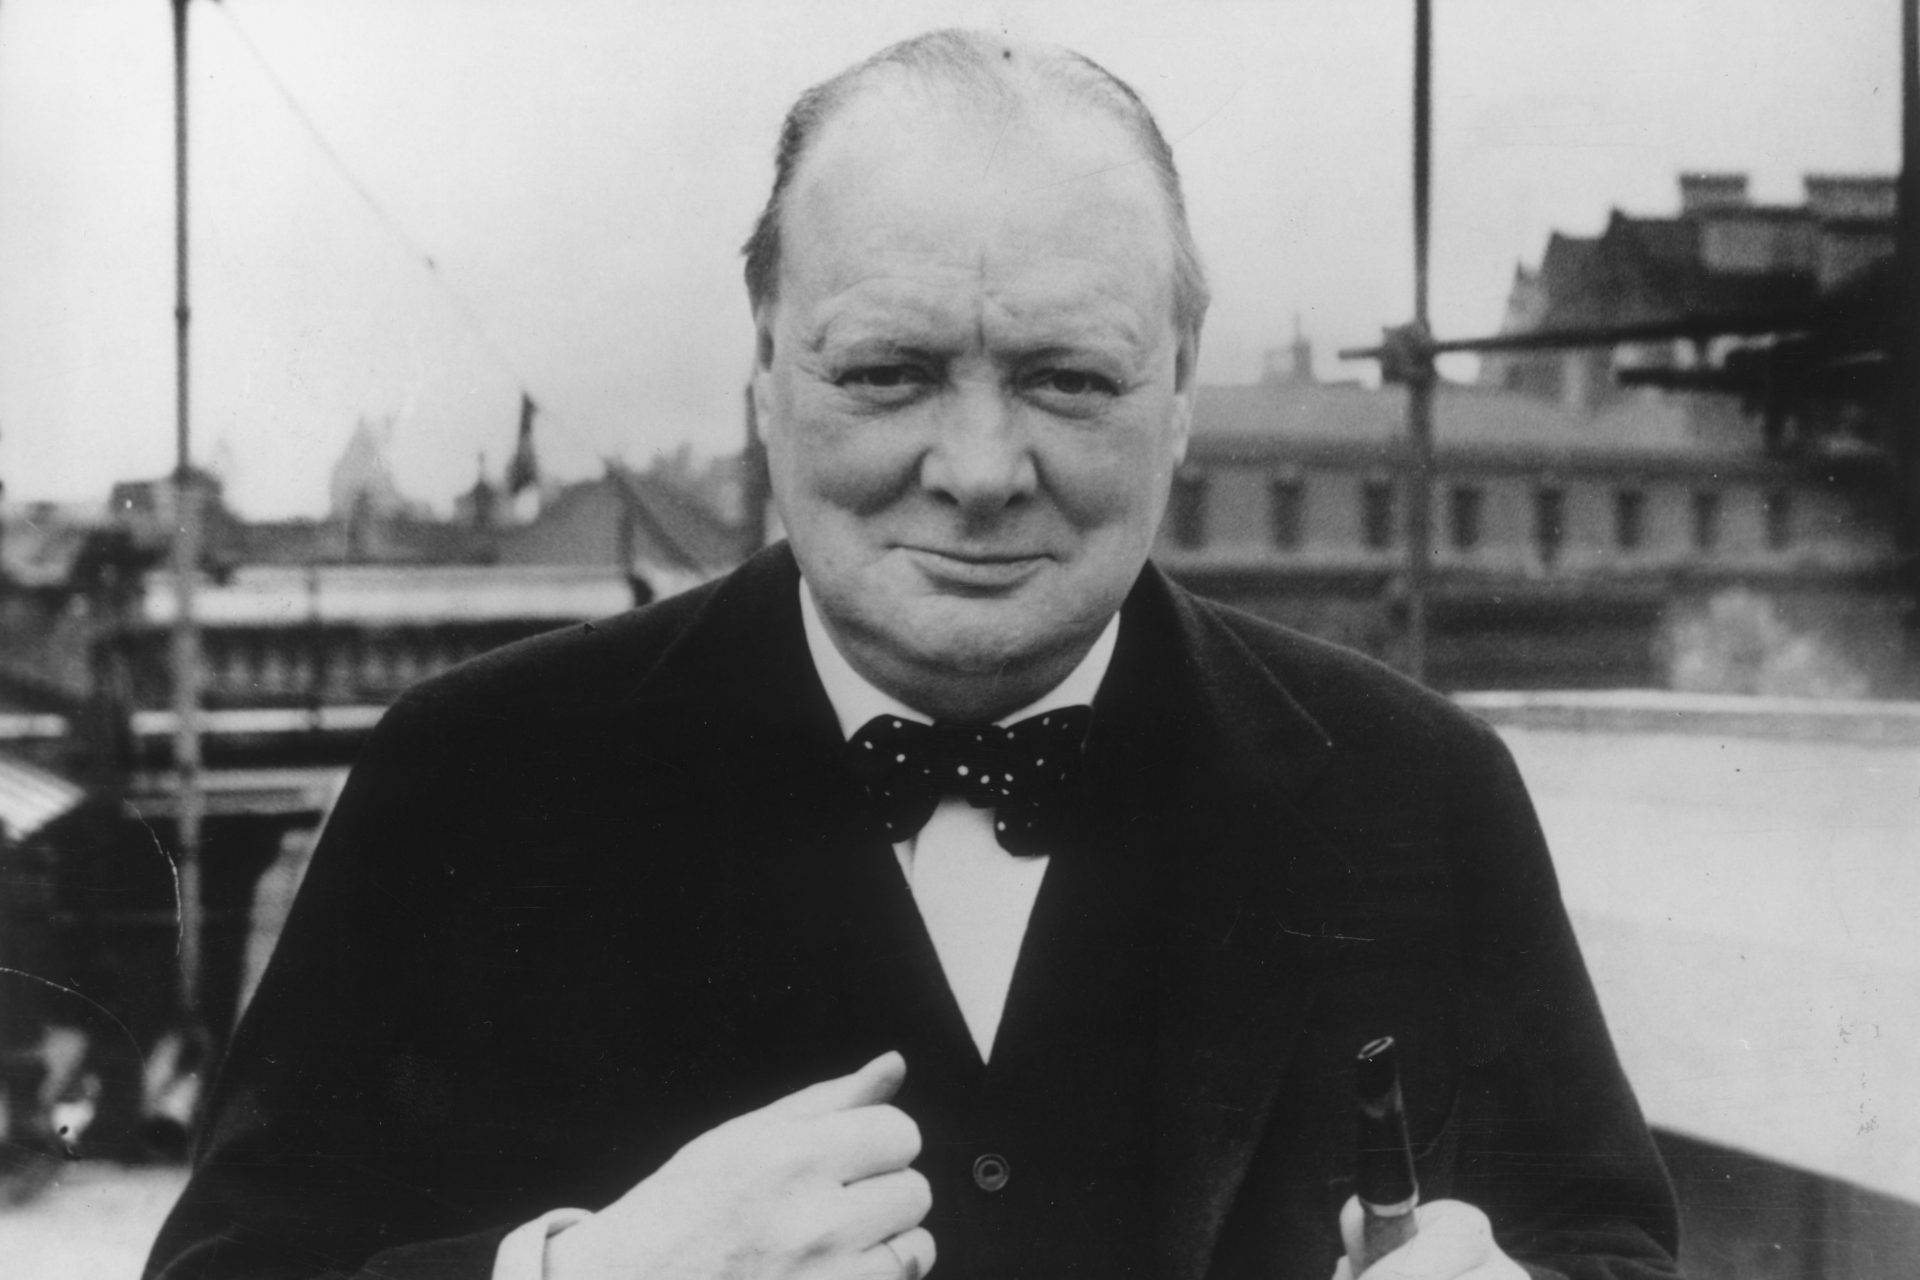 150th anniversary of the birth of Winston Churchill